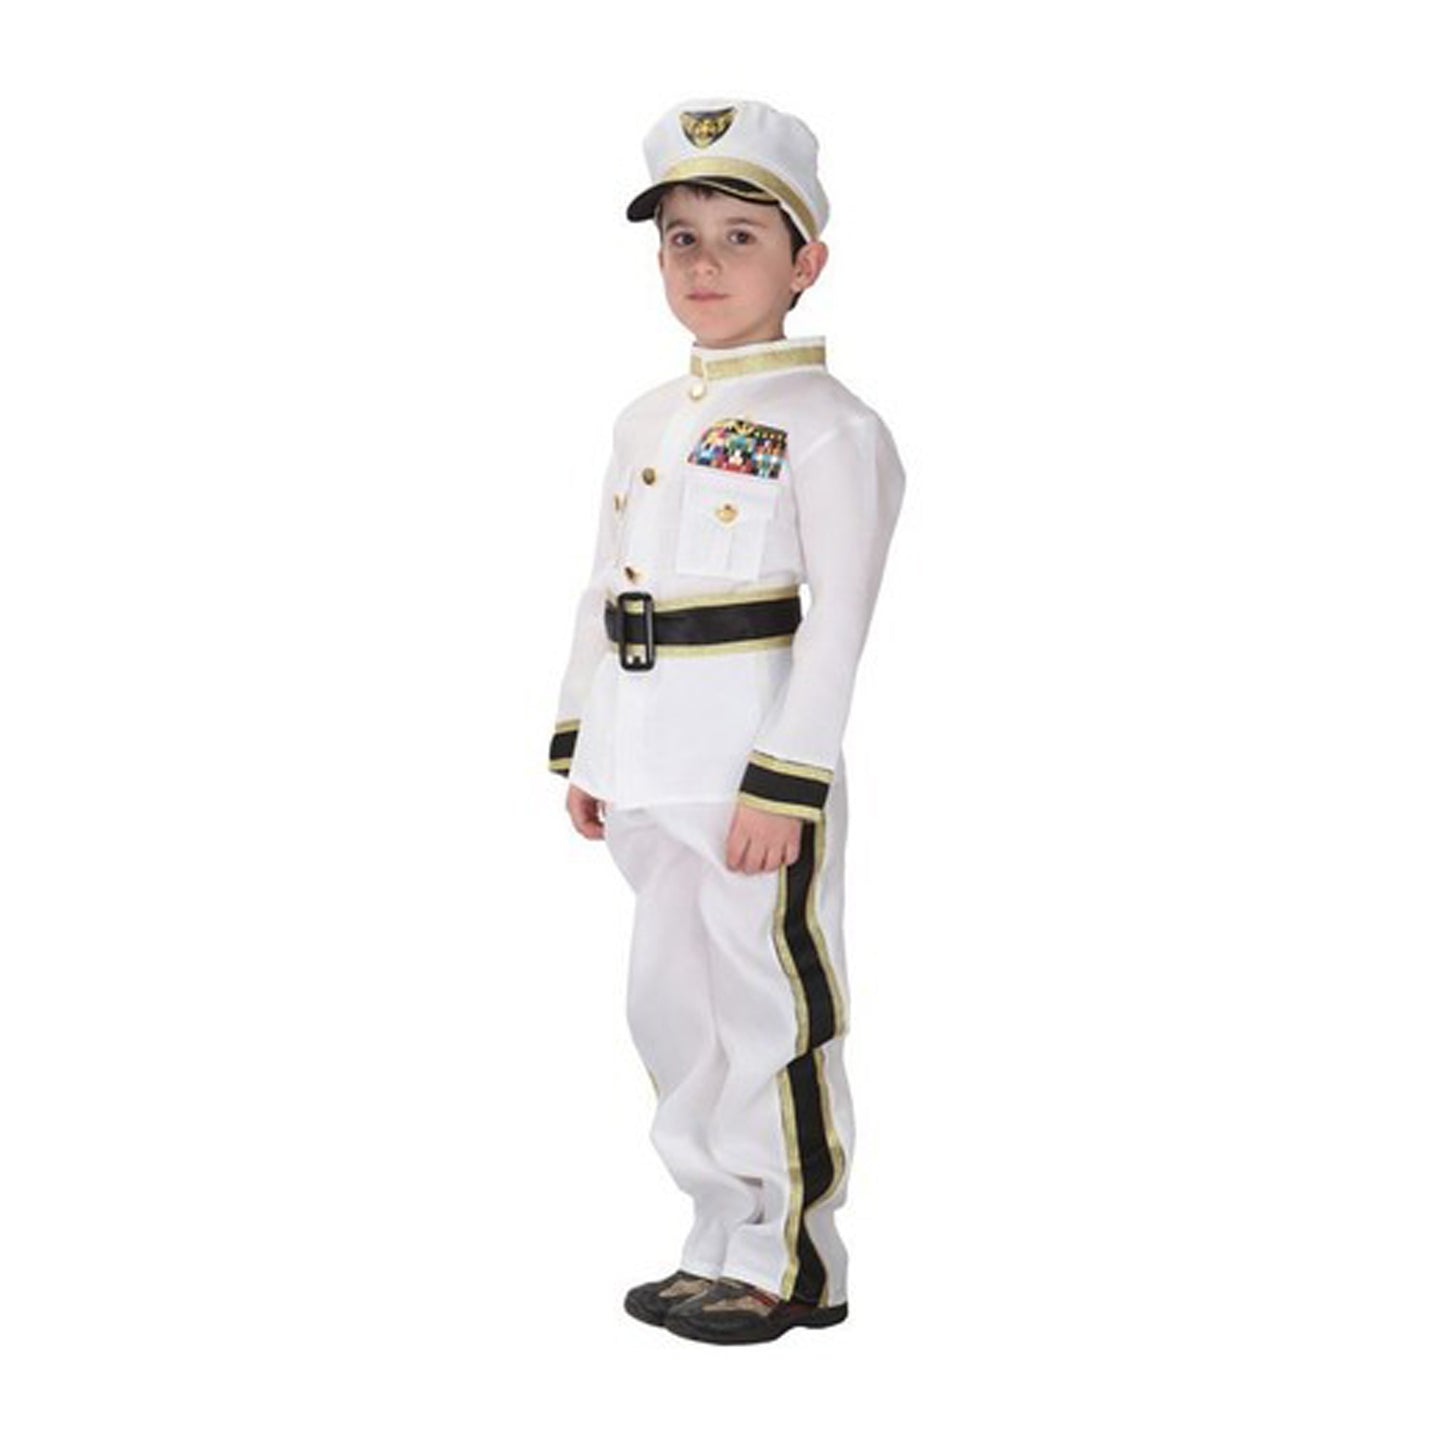 Marine Boy